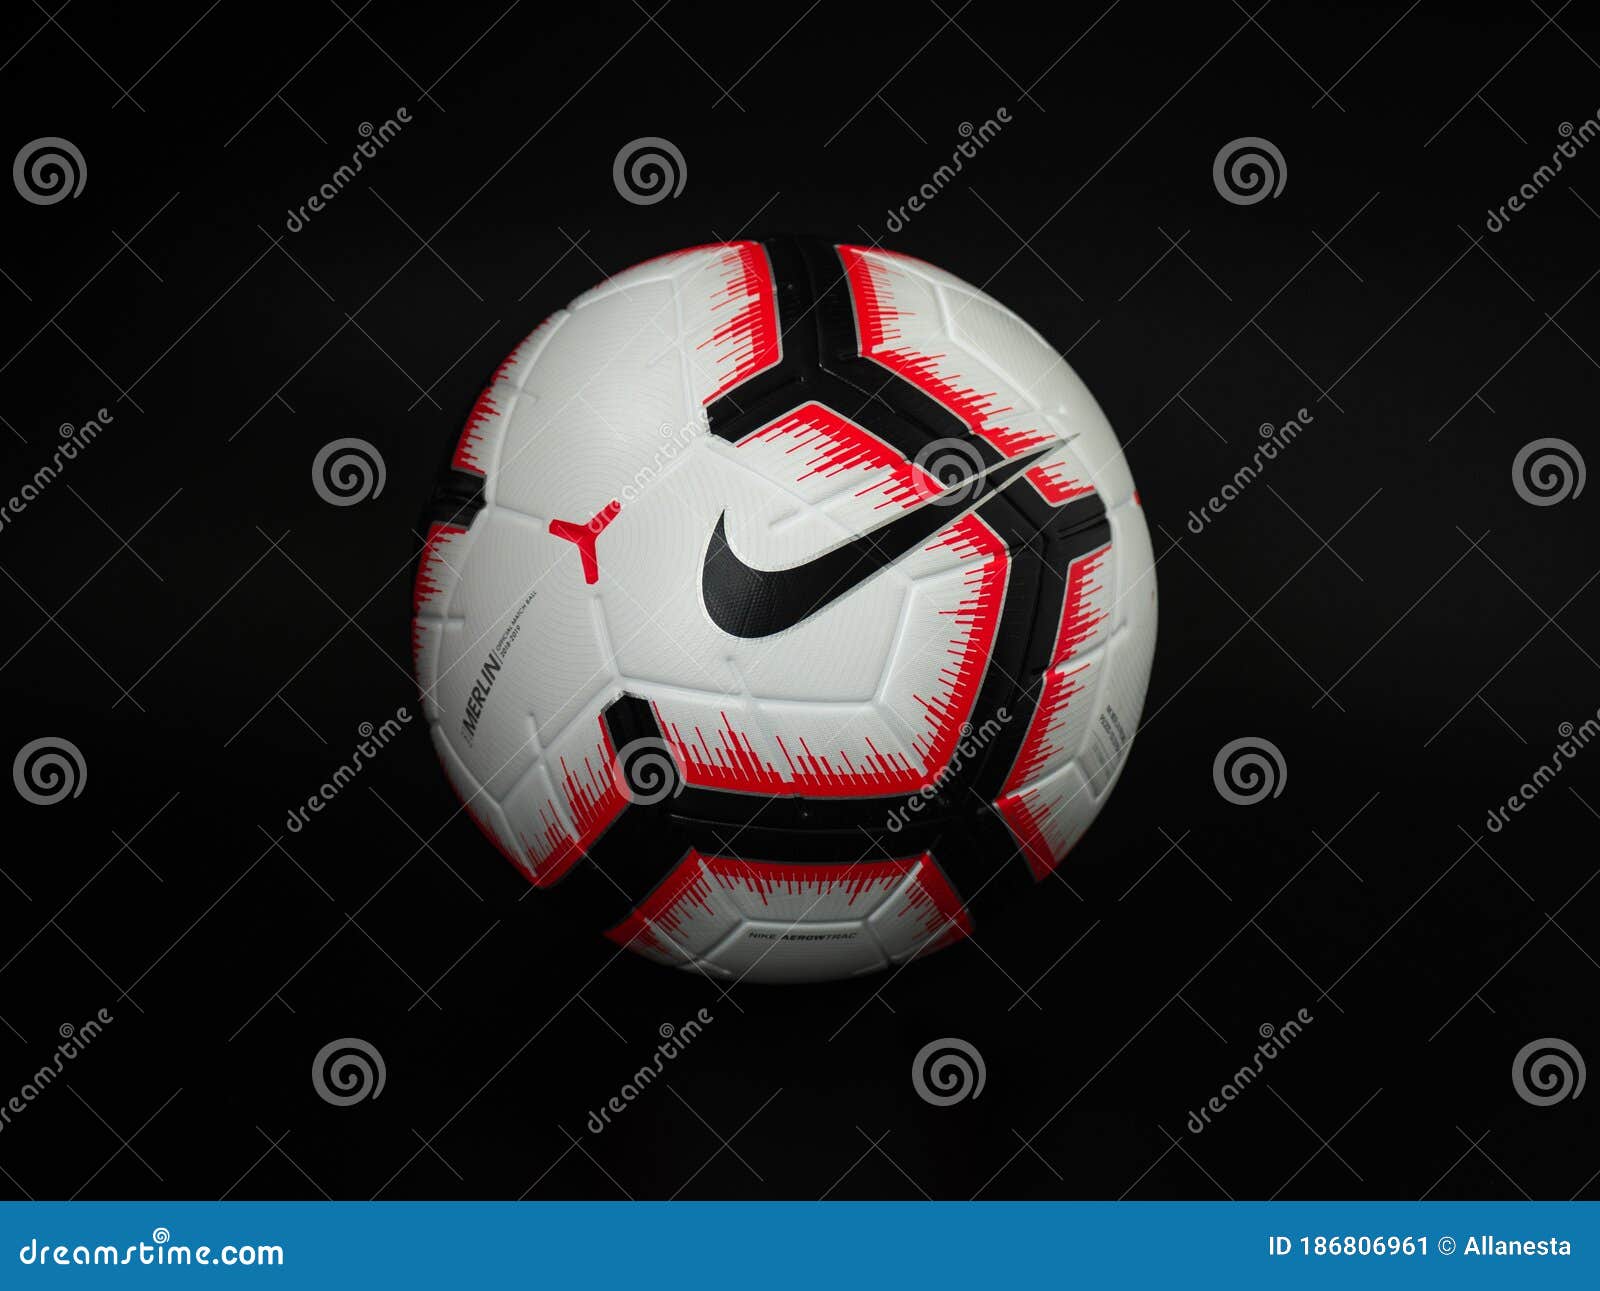 triunfante Infantil milla nautica Kyiv, Ukraine - May 2020. Soccer Ball on Black Background, Nike Football  Editorial Photo - Image of pattern, equipment: 186806961